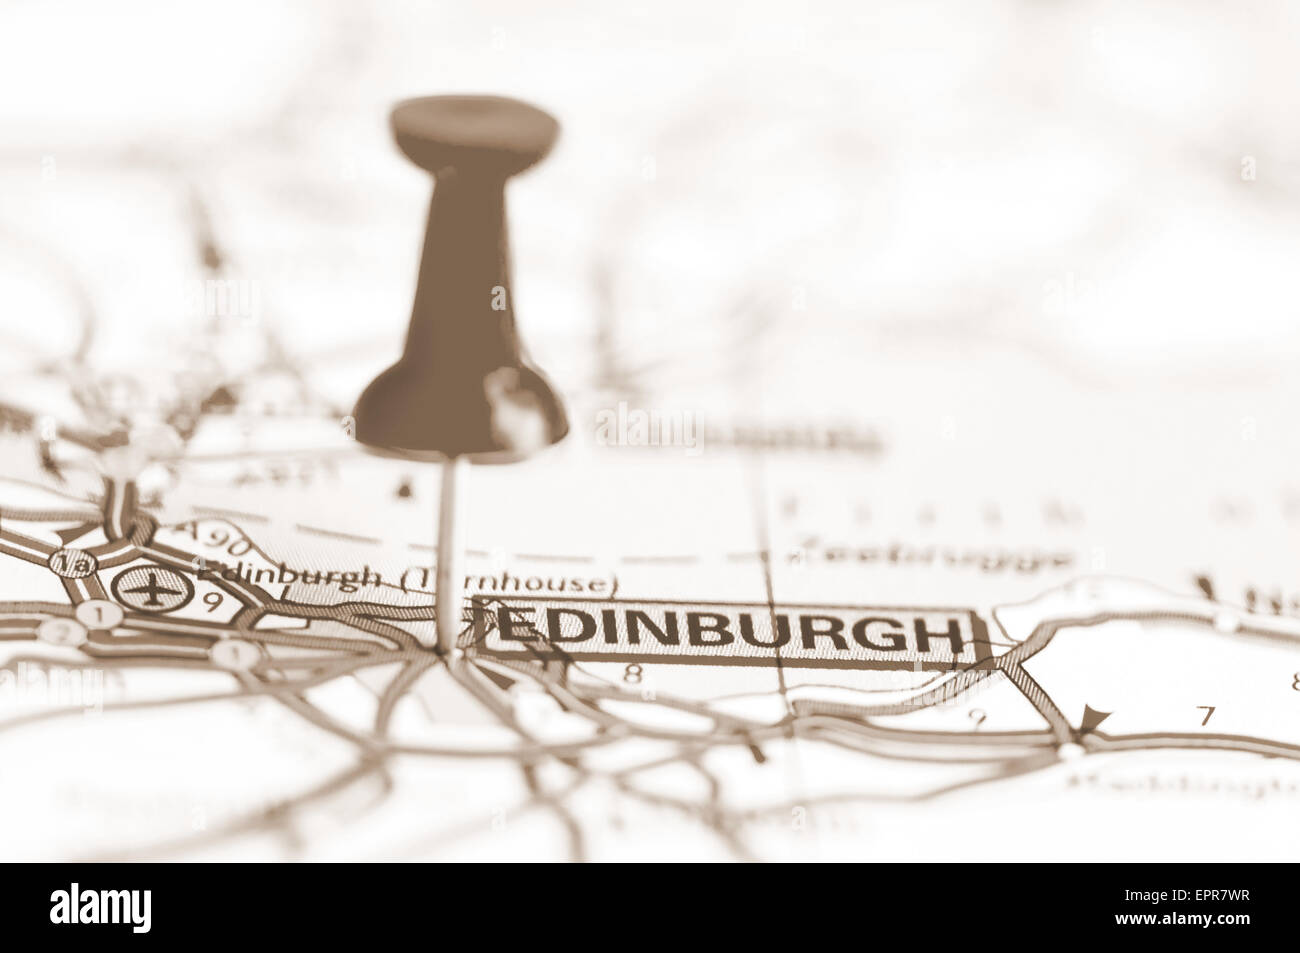 Pushpin showing Edinburgh City On Map, Scotland with vintage sepia filter effect. Travel Destination Concept Stock Photo